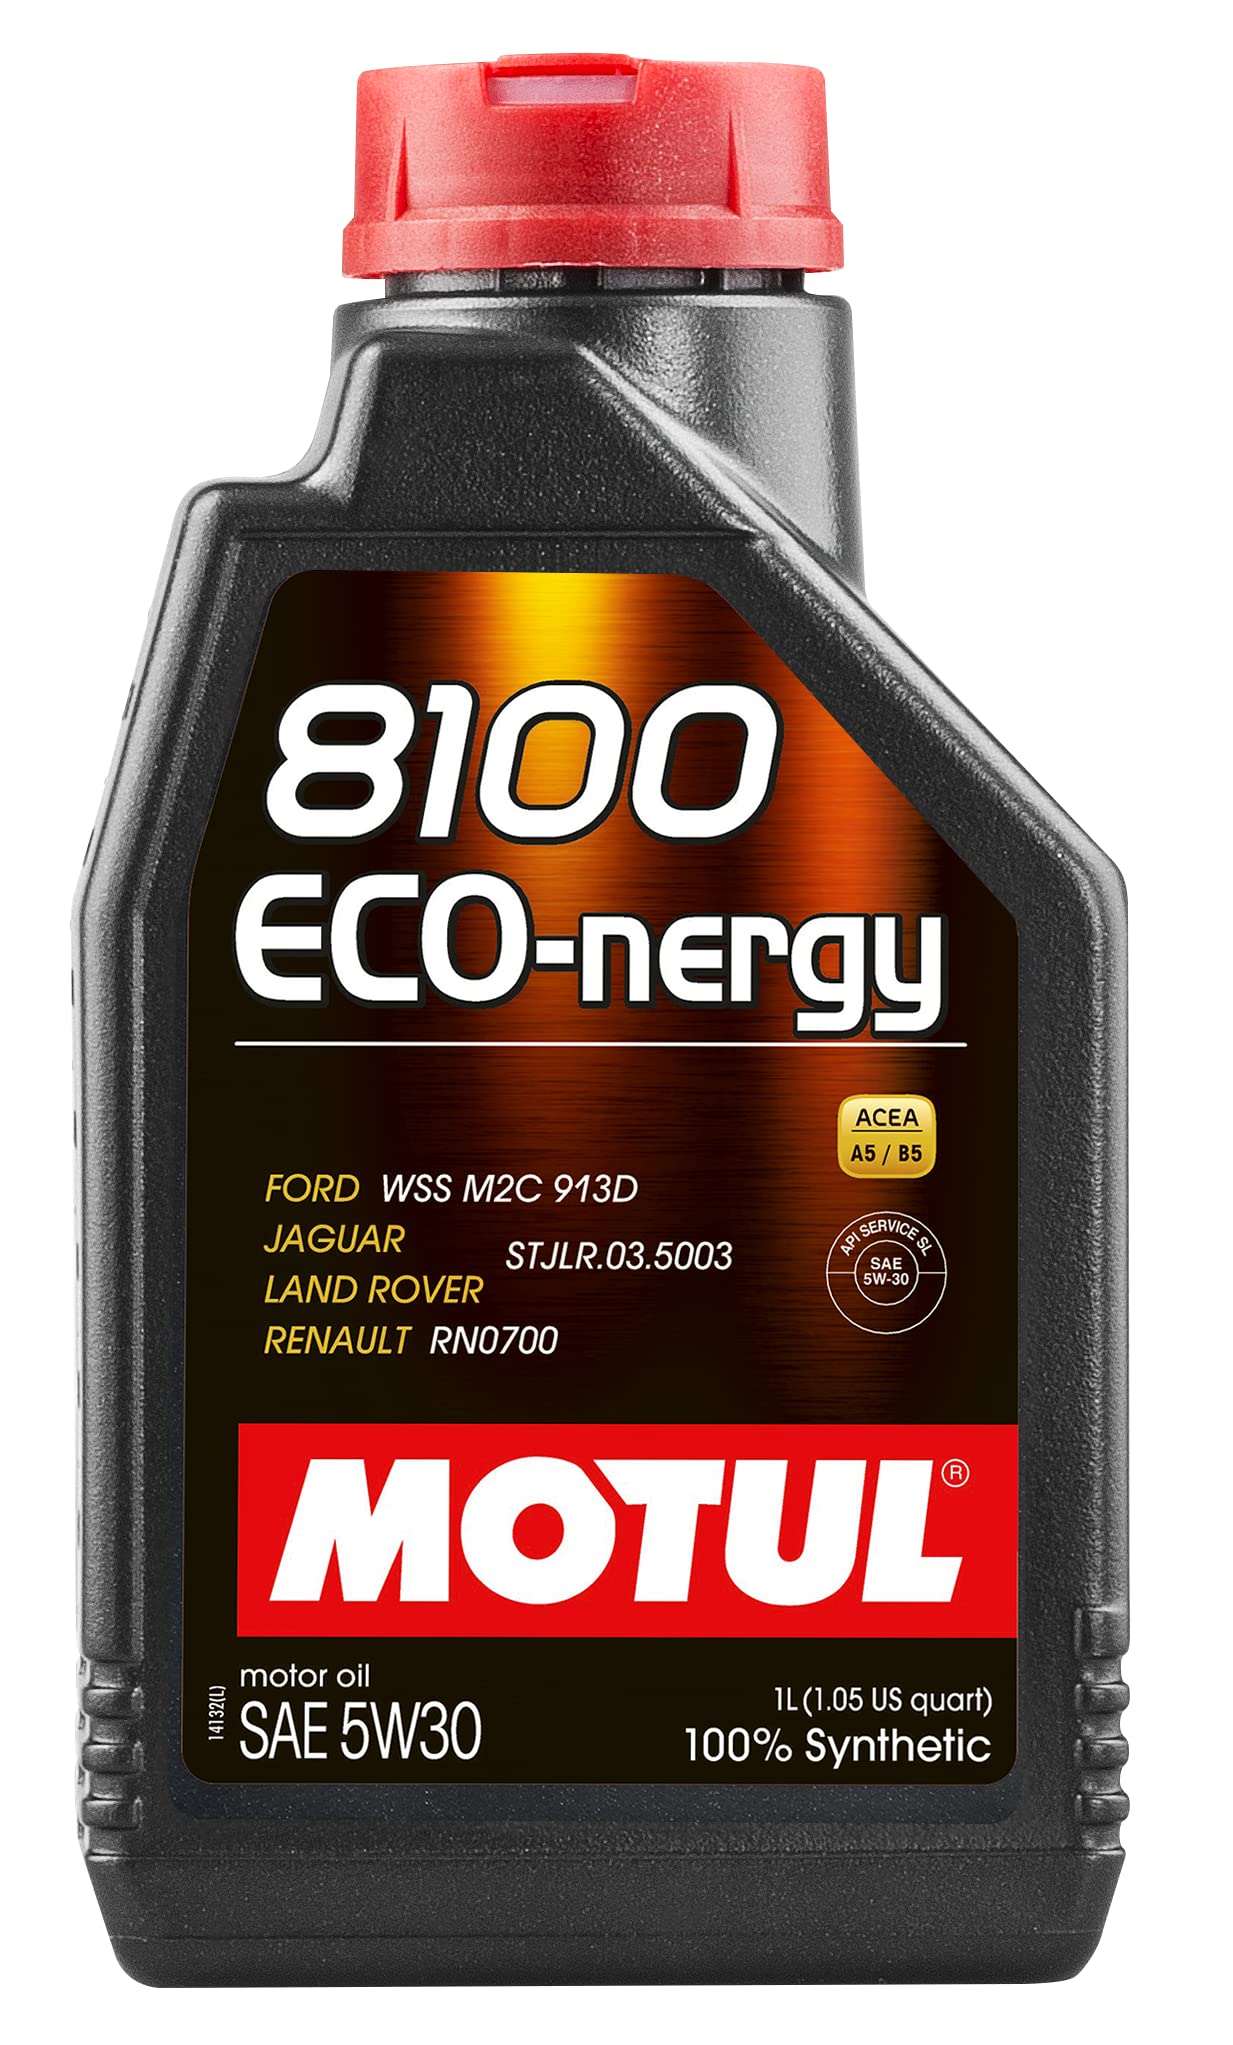 Motul 102782 8100 Motoröl Eco-nergy 5W-30 1 L, Brown von Motul